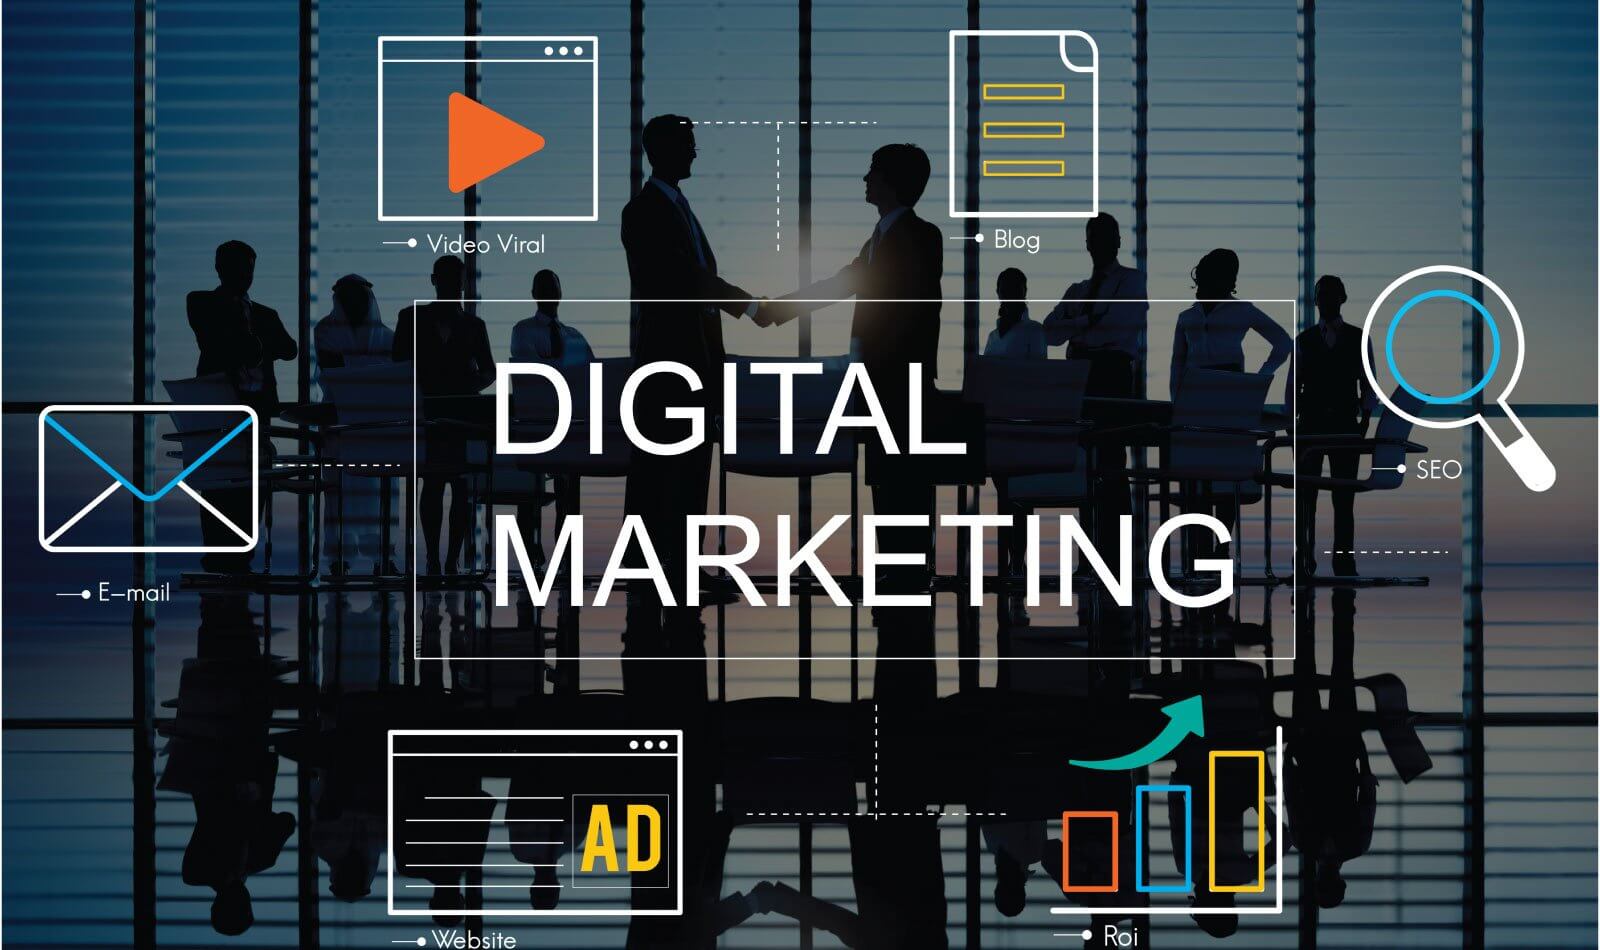 Digital Marketing Companies